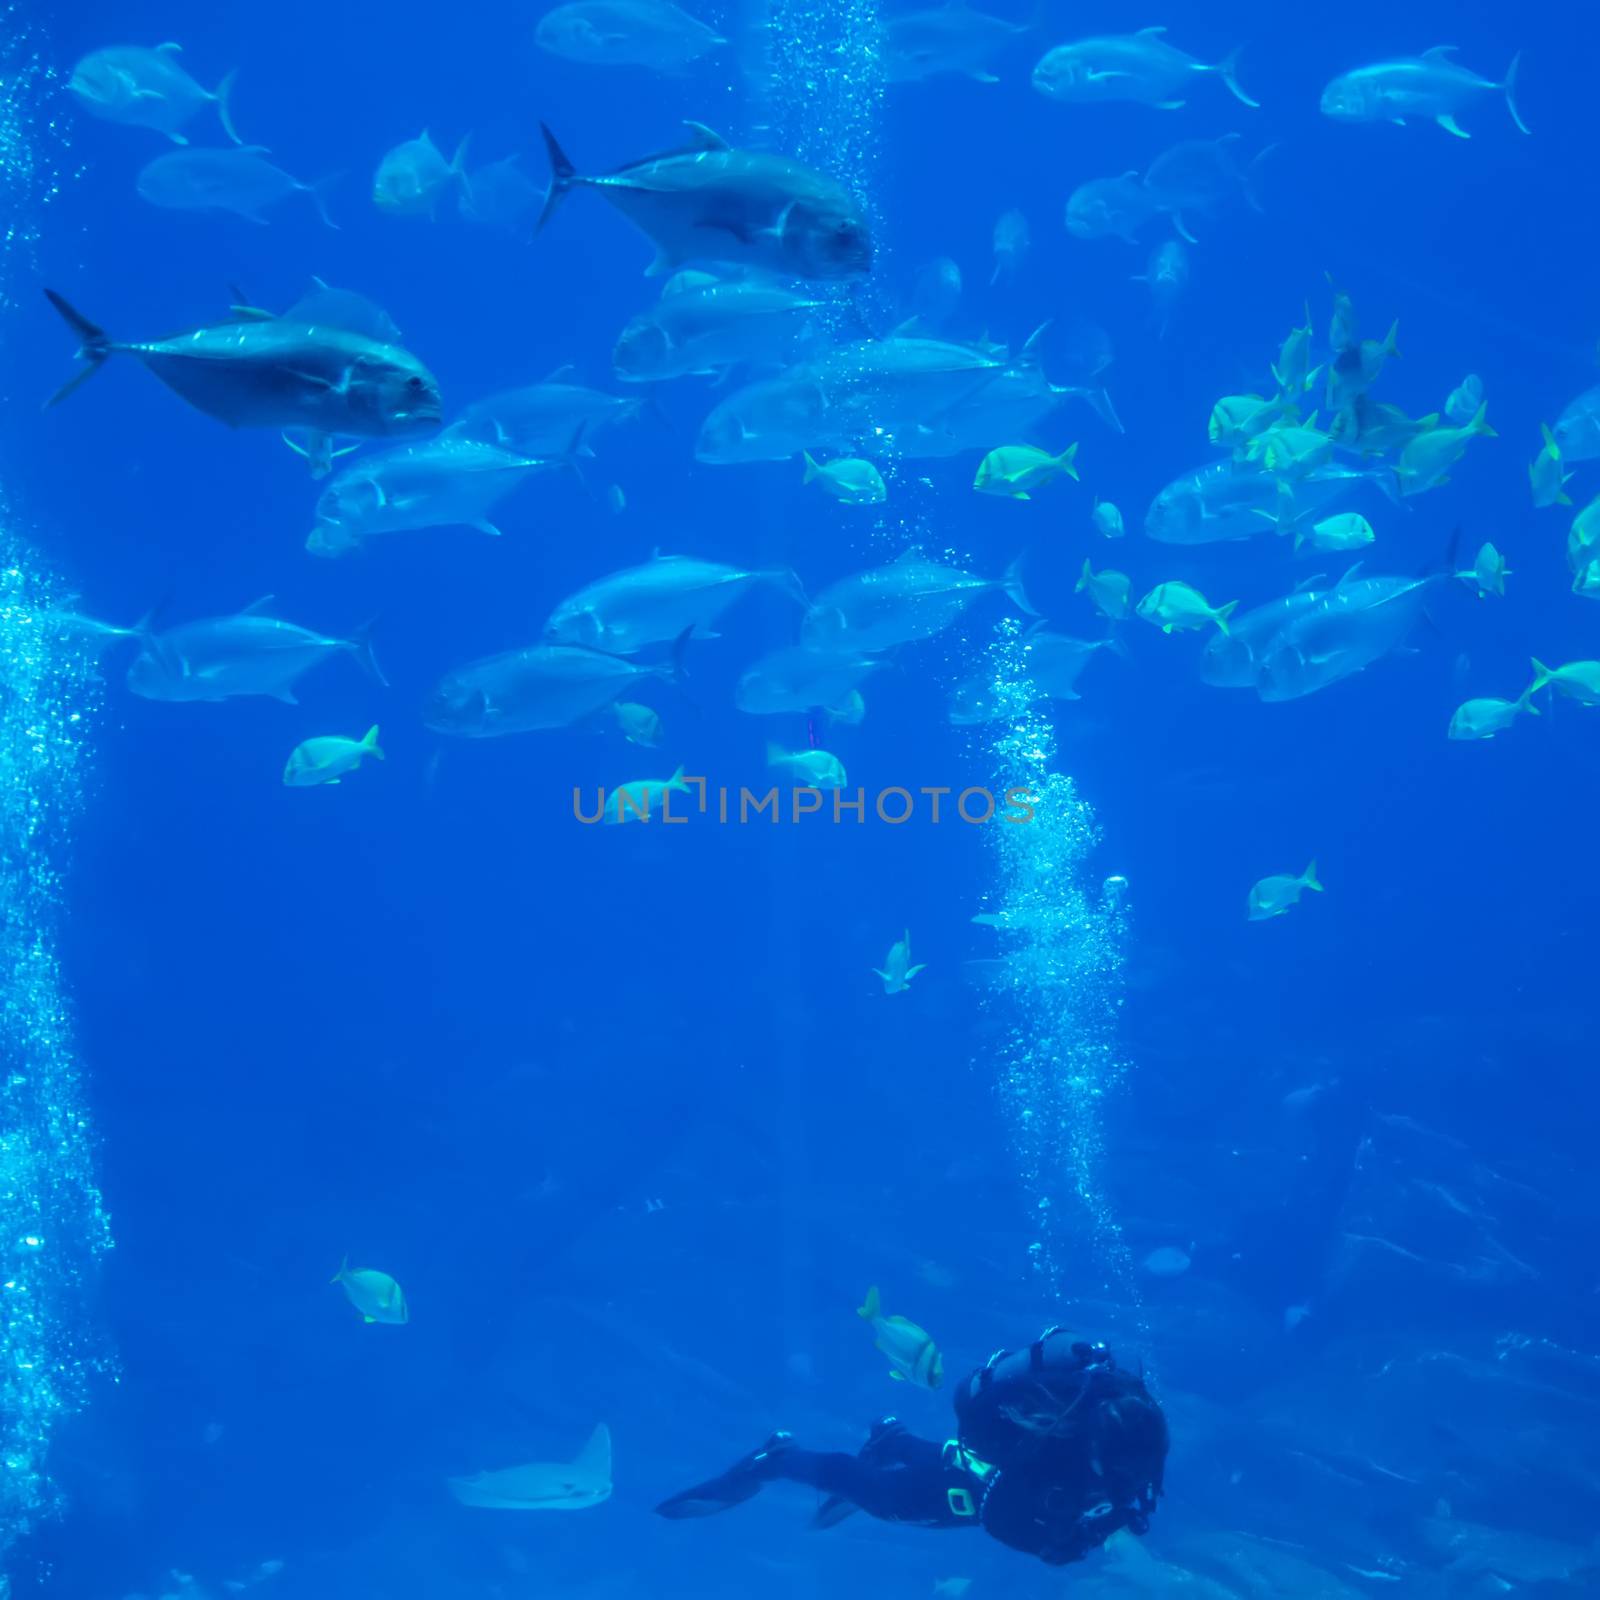 scuba diver with fish in ocean